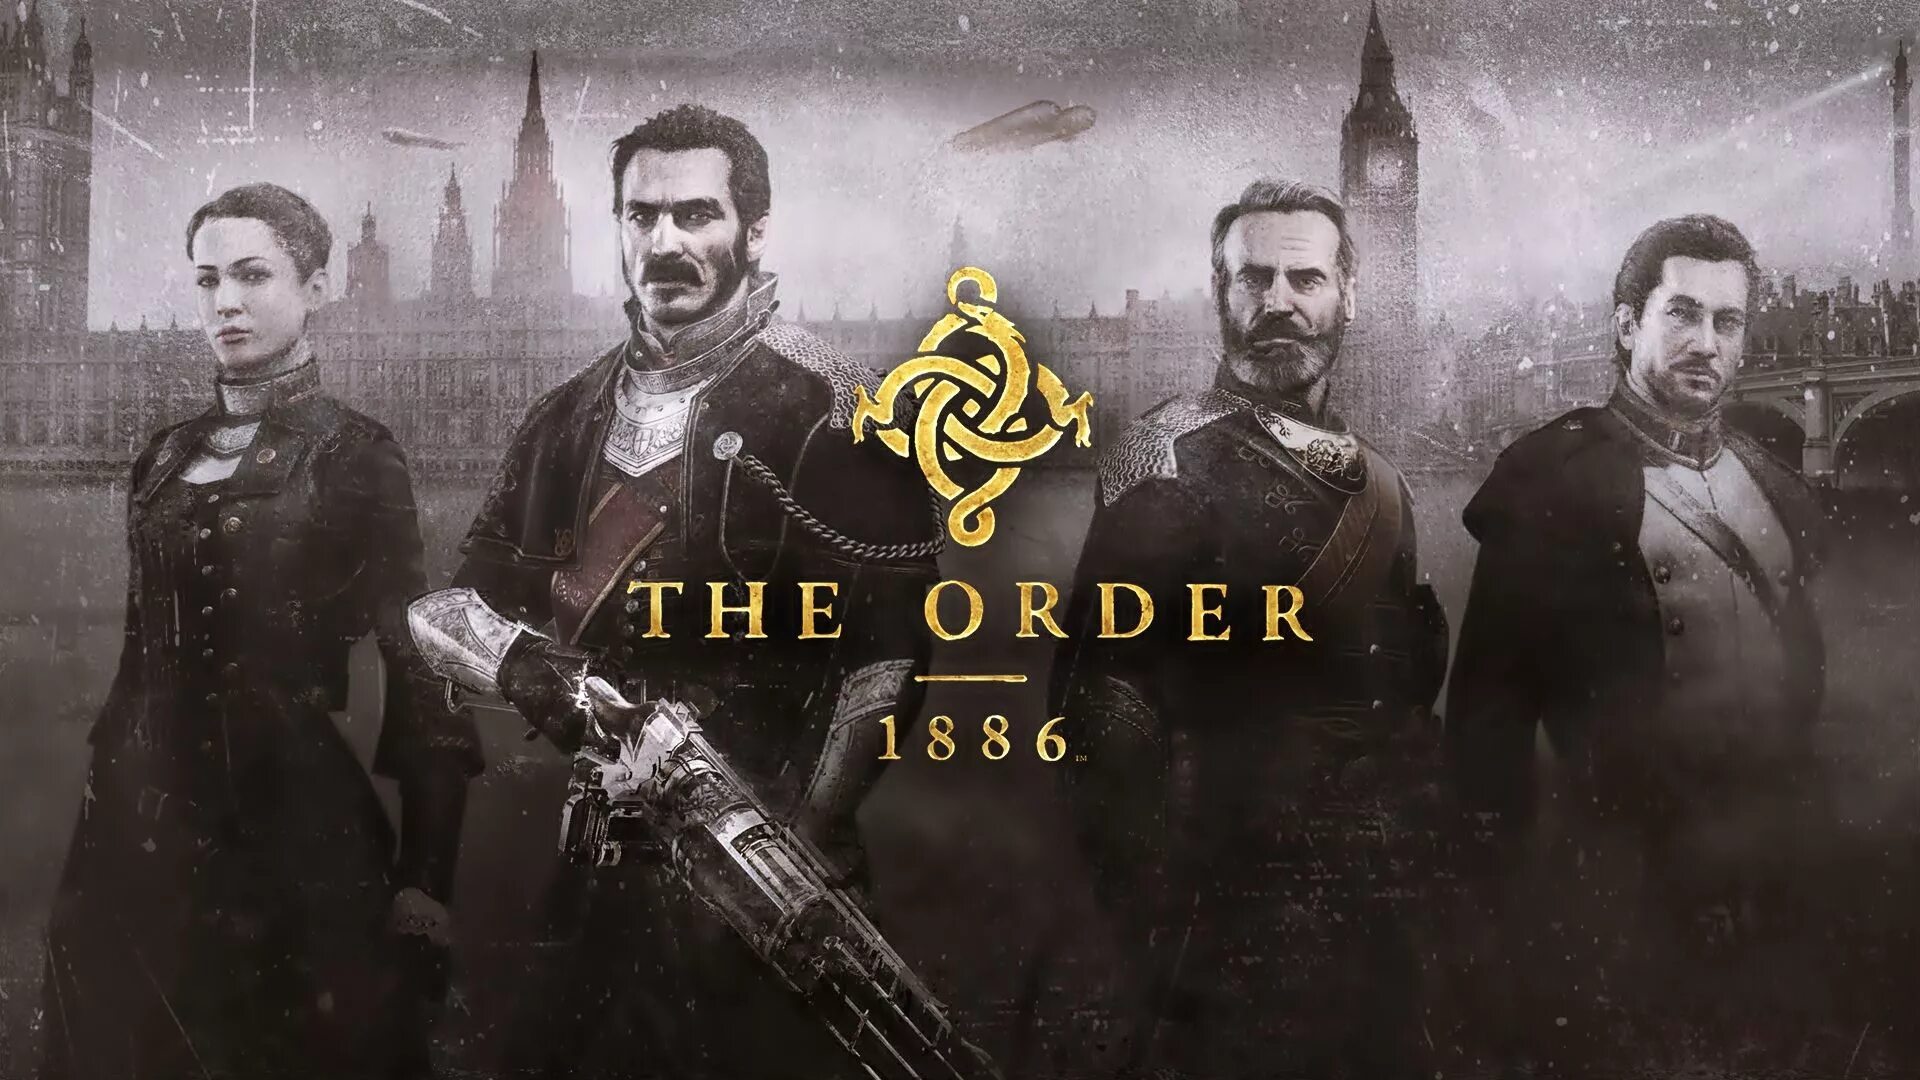 Act order. The order: 1886. Игра орден 1886 на ps4. Сэр Галахад the order 1886 Art.